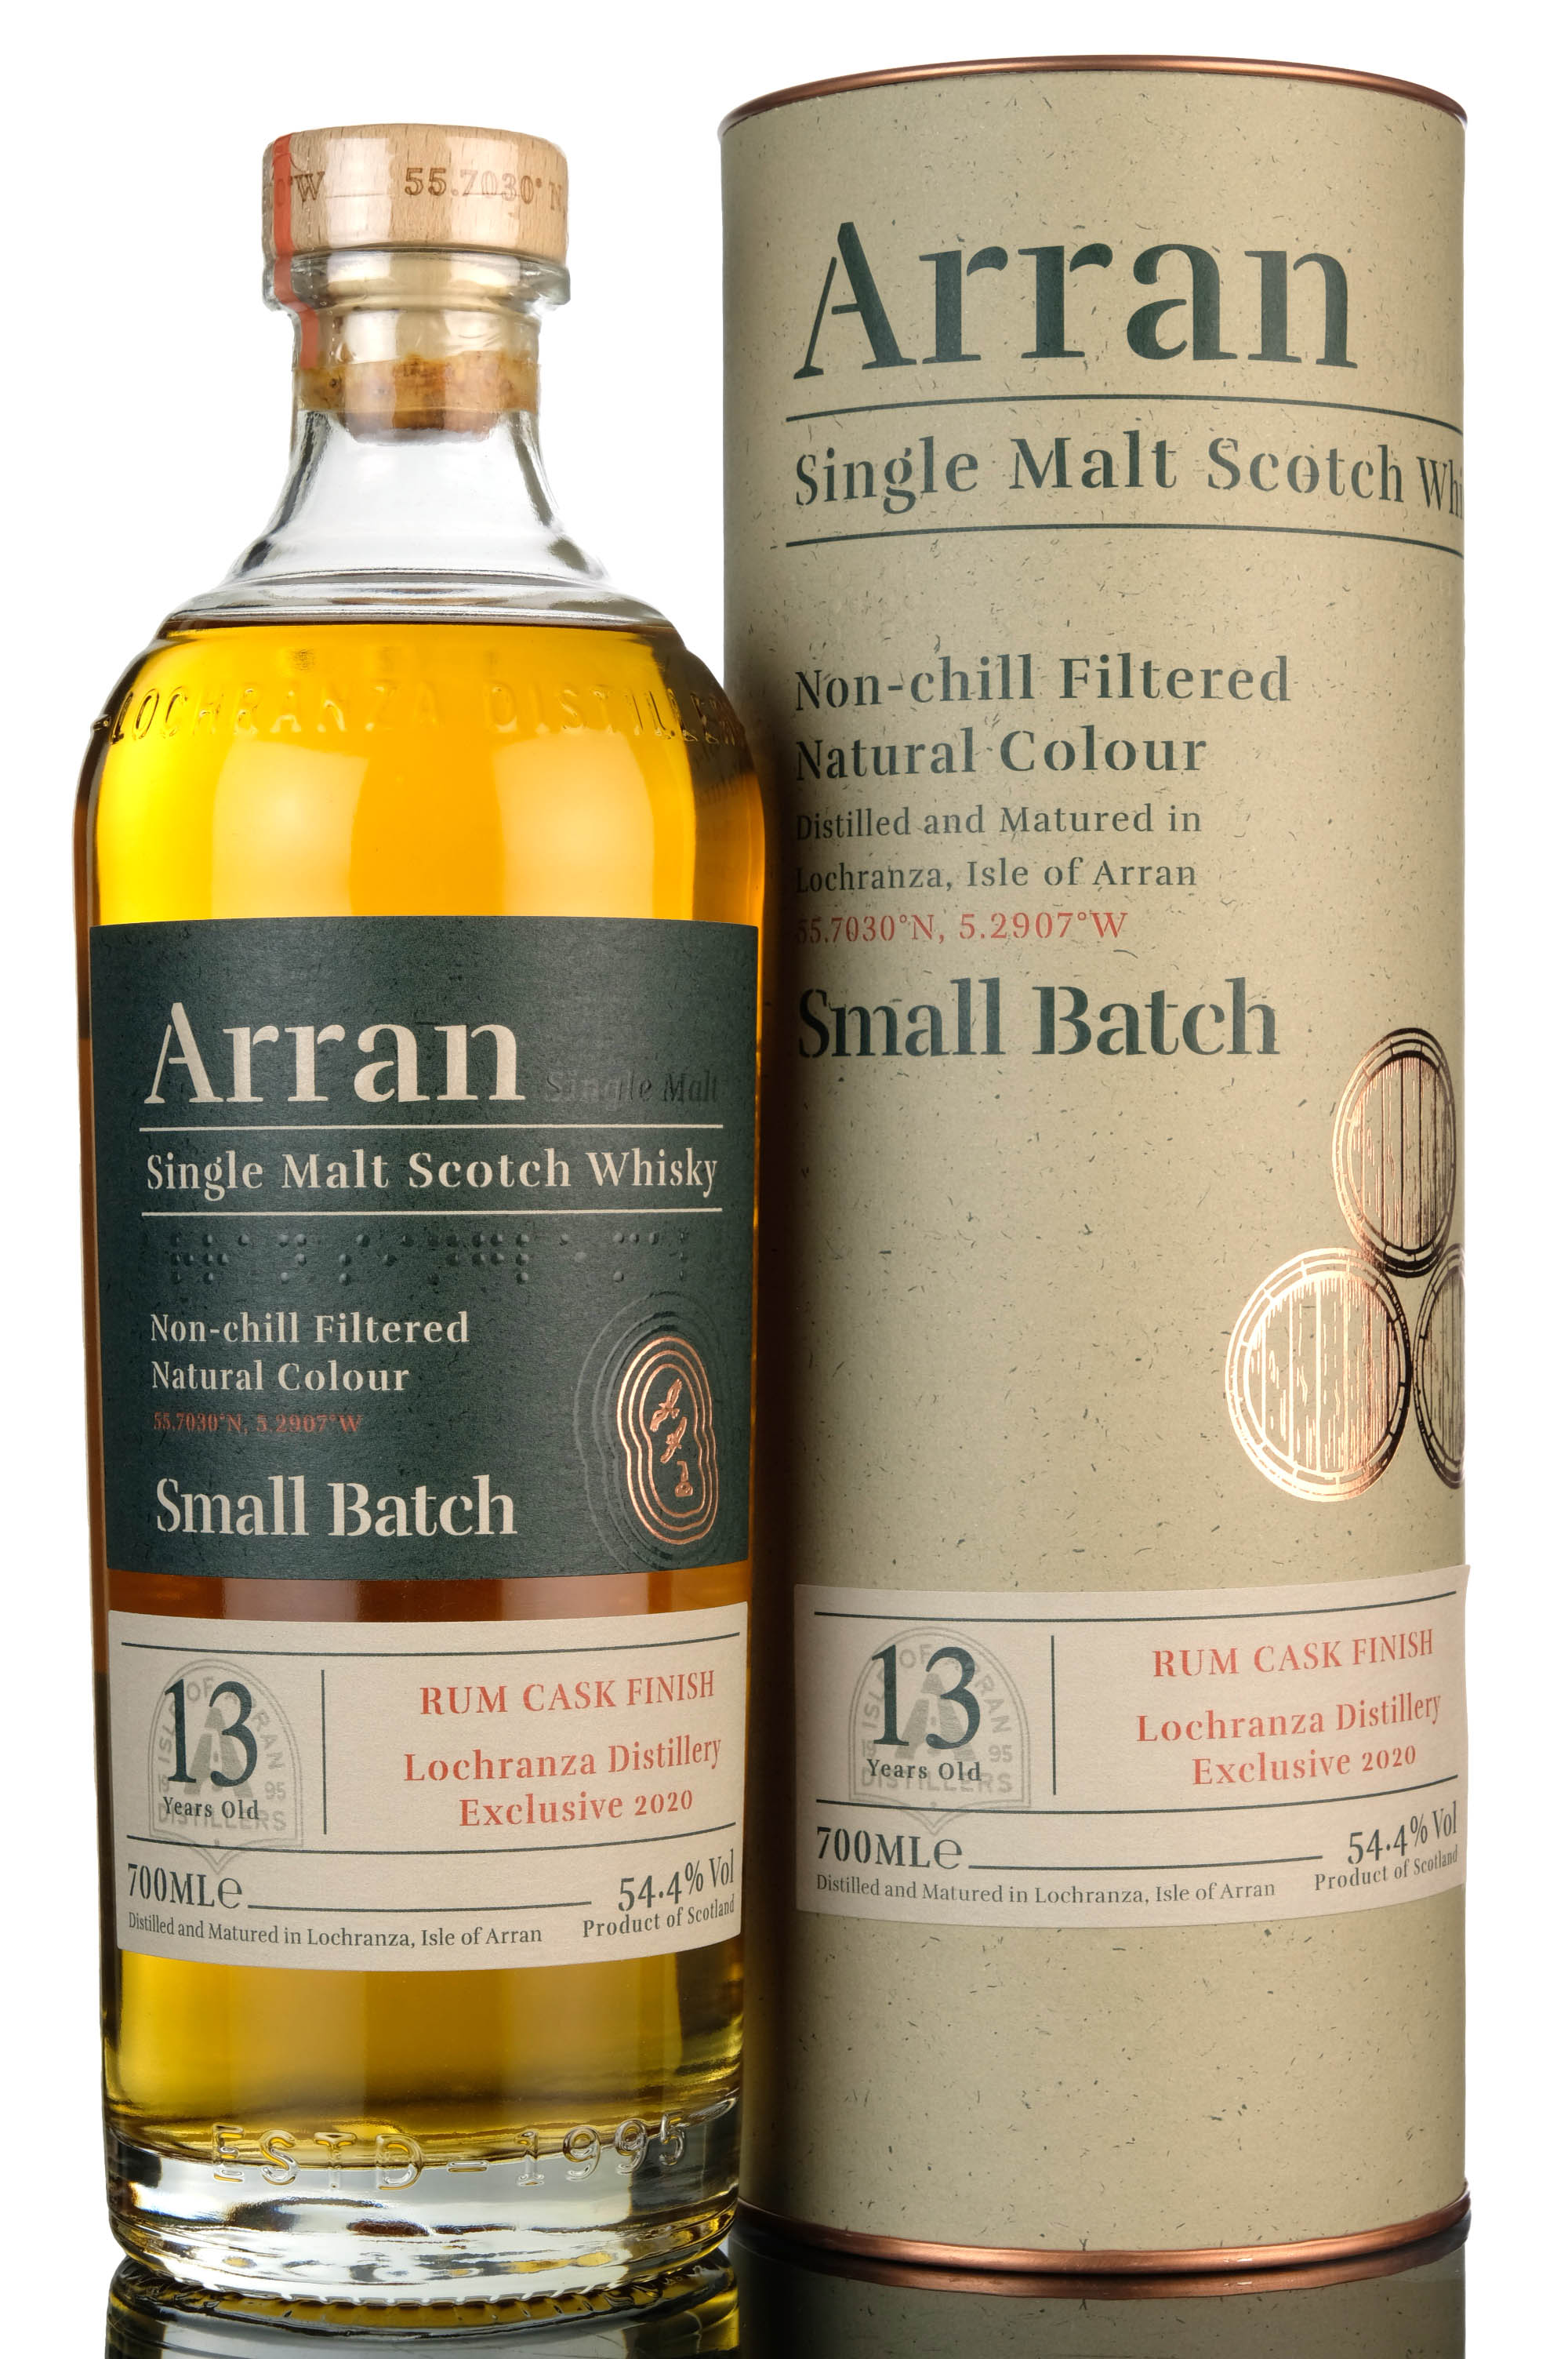 Arran 13 Year Old - Small Batch - Lochranza Distillery Exclusive 2020